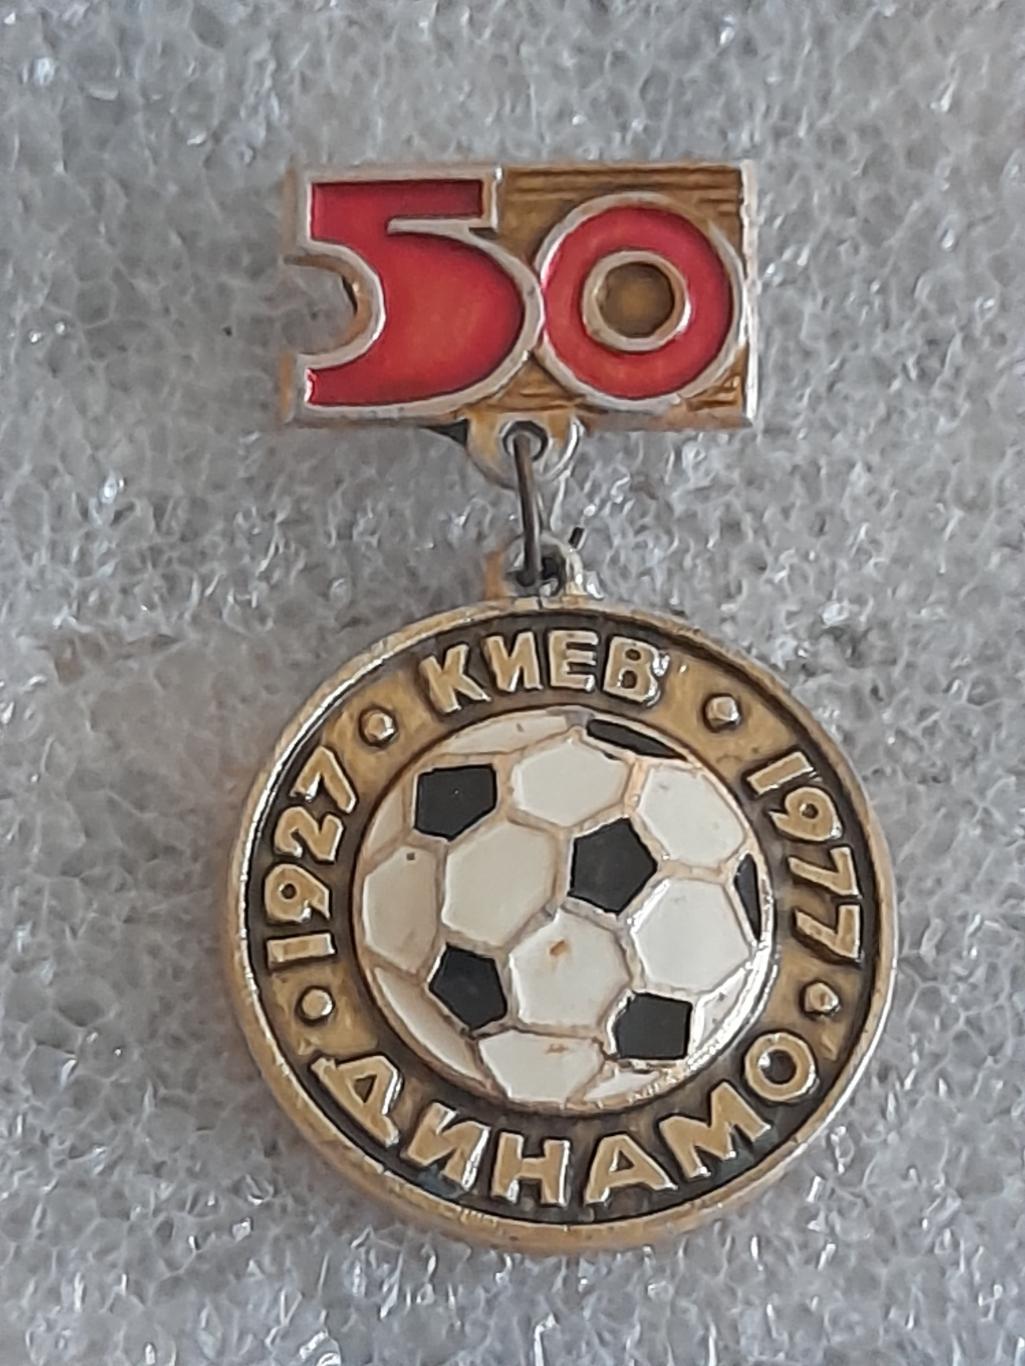 ФК Динамо, Киев (Украина)/FC Dynamo, Kyiv, Ukraine